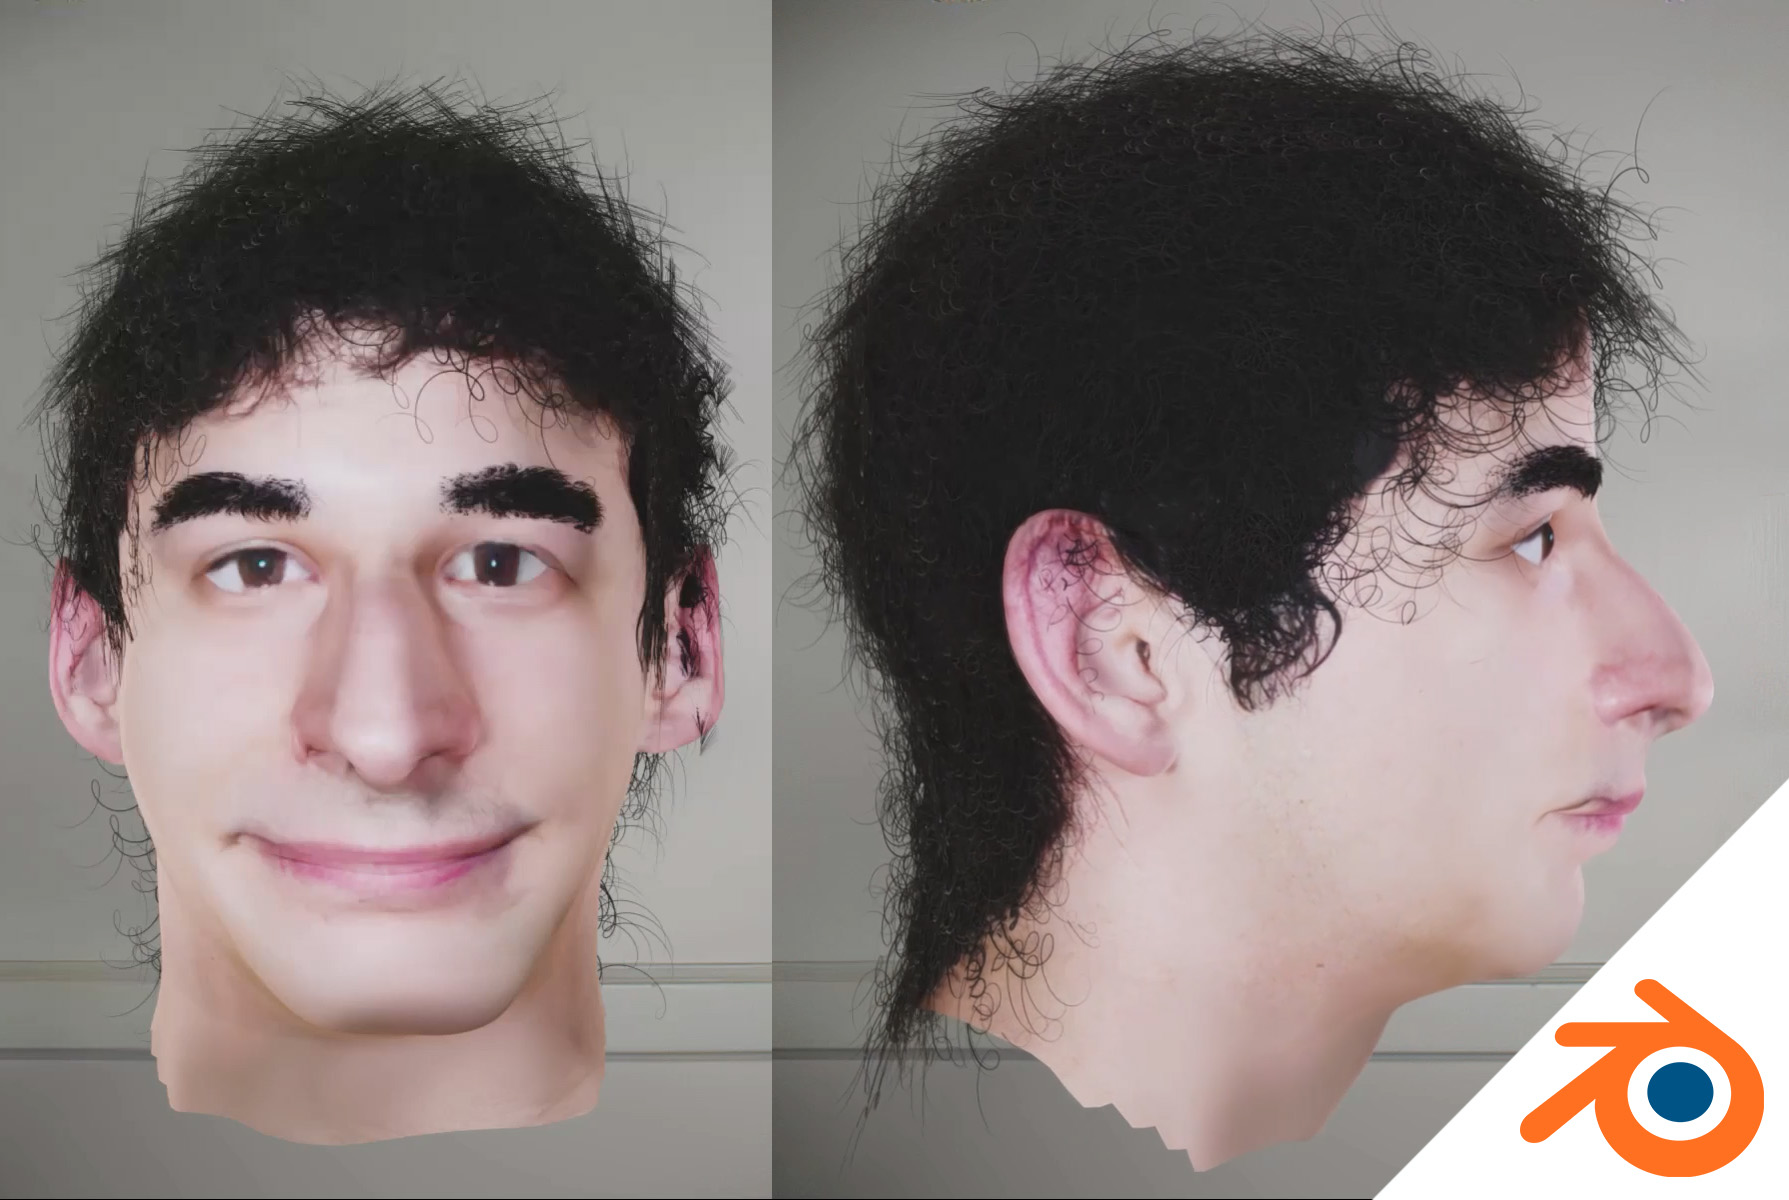 YandereDev (Blender 3D Face Model) by TheGamerXU on DeviantArt. www.deviant...